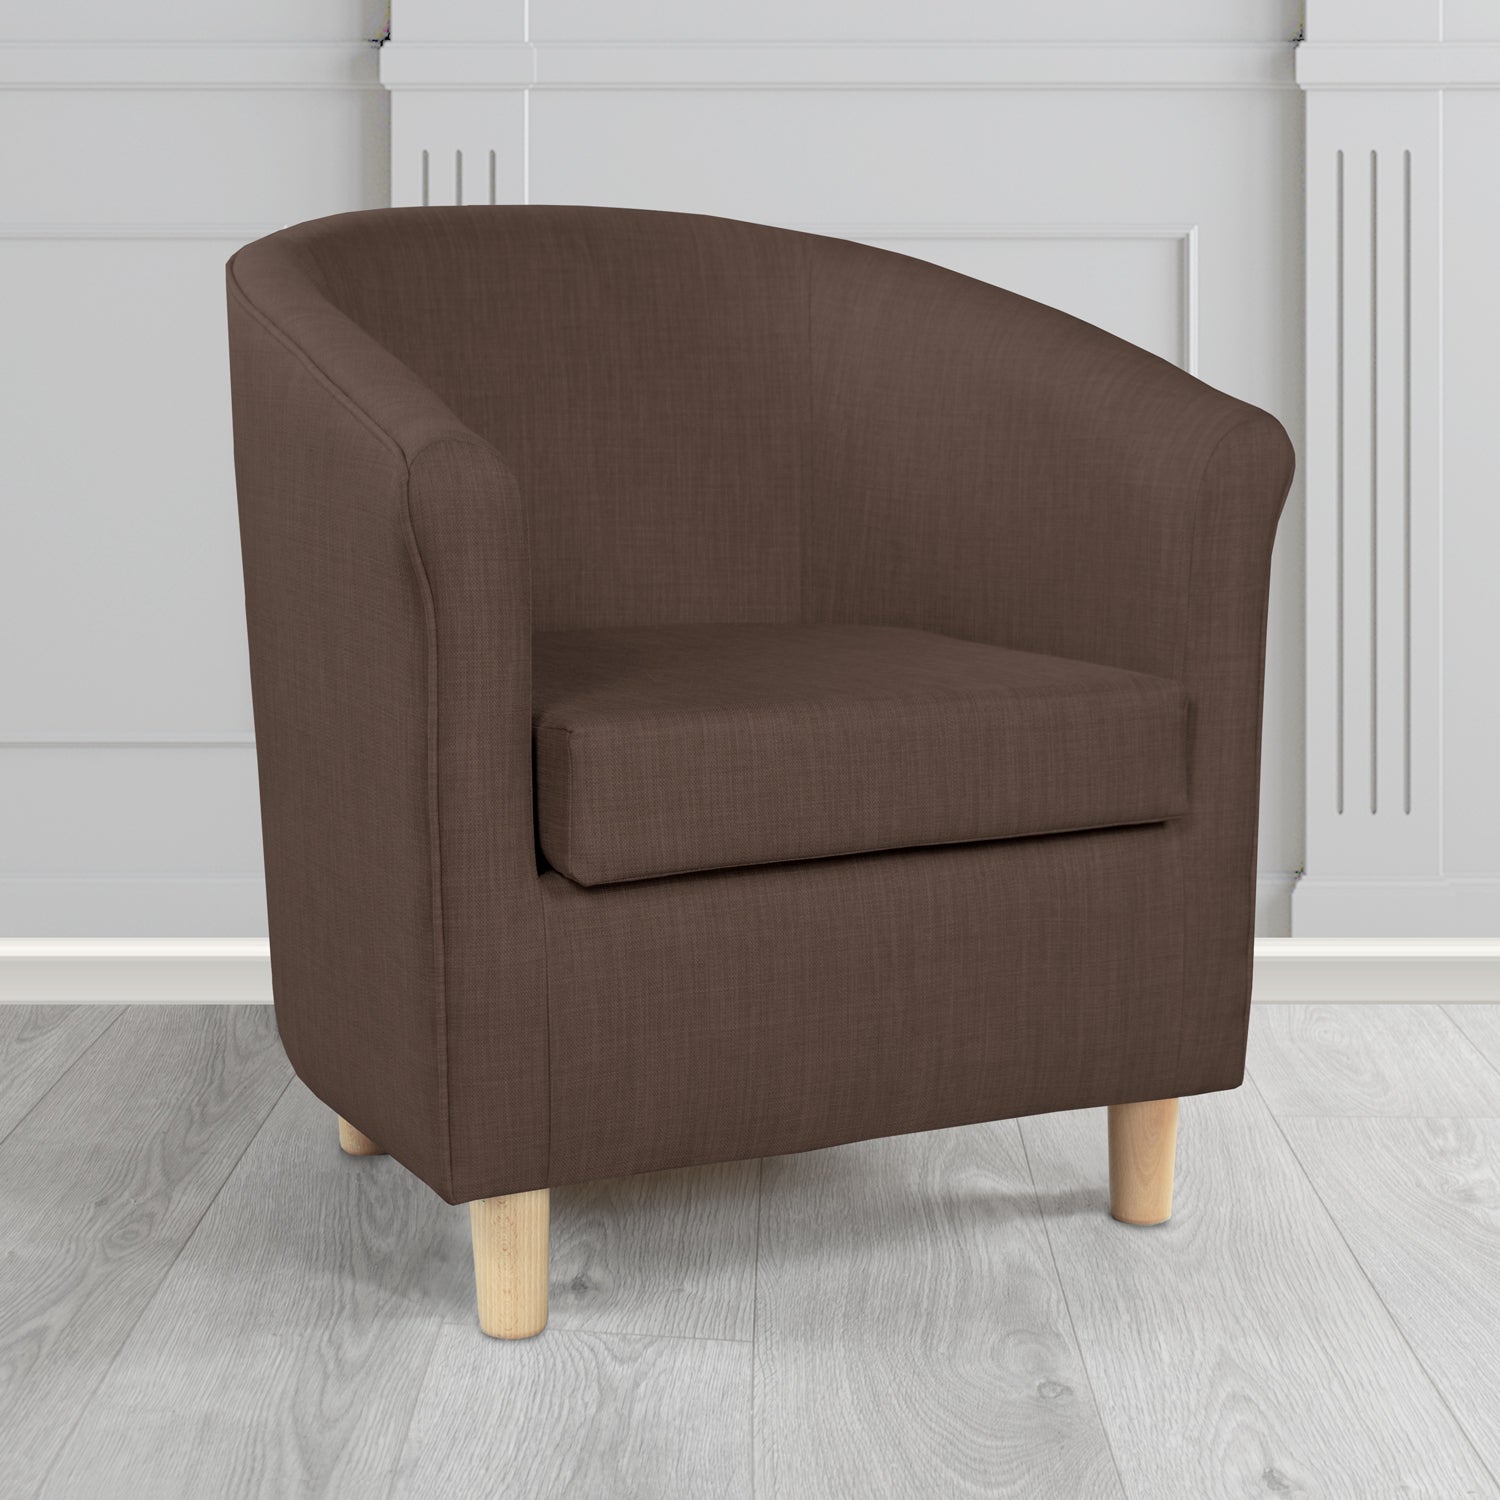 Tuscany Charles Sandalwood Plain Linen Fabric Tub Chair - The Tub Chair Shop